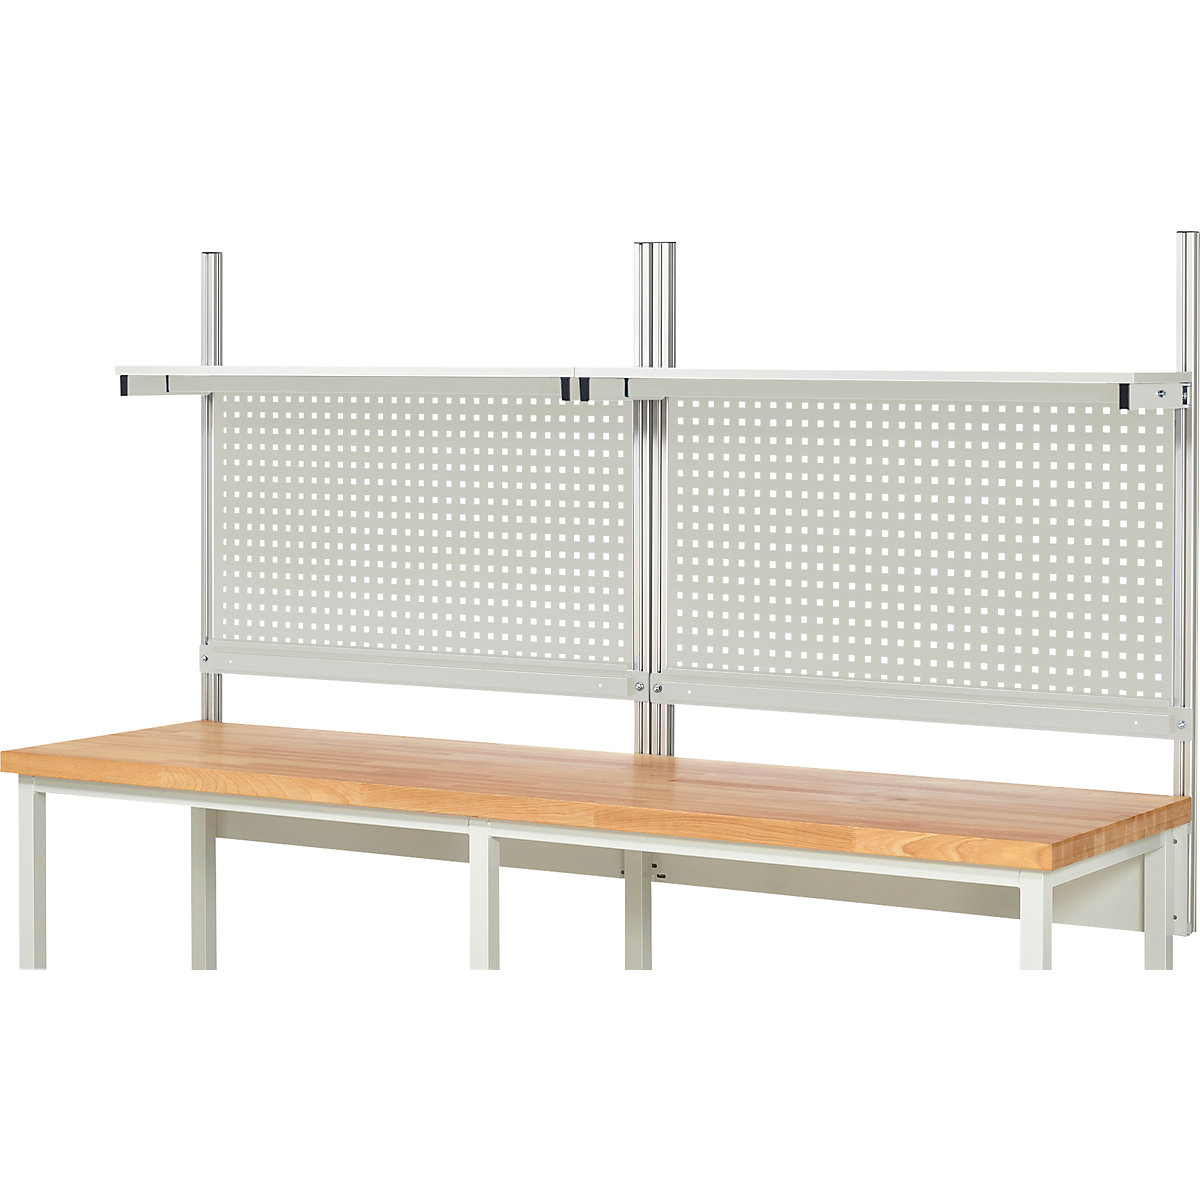 Complete modular system set 1 – RAU, for workbench, width 2500 mm